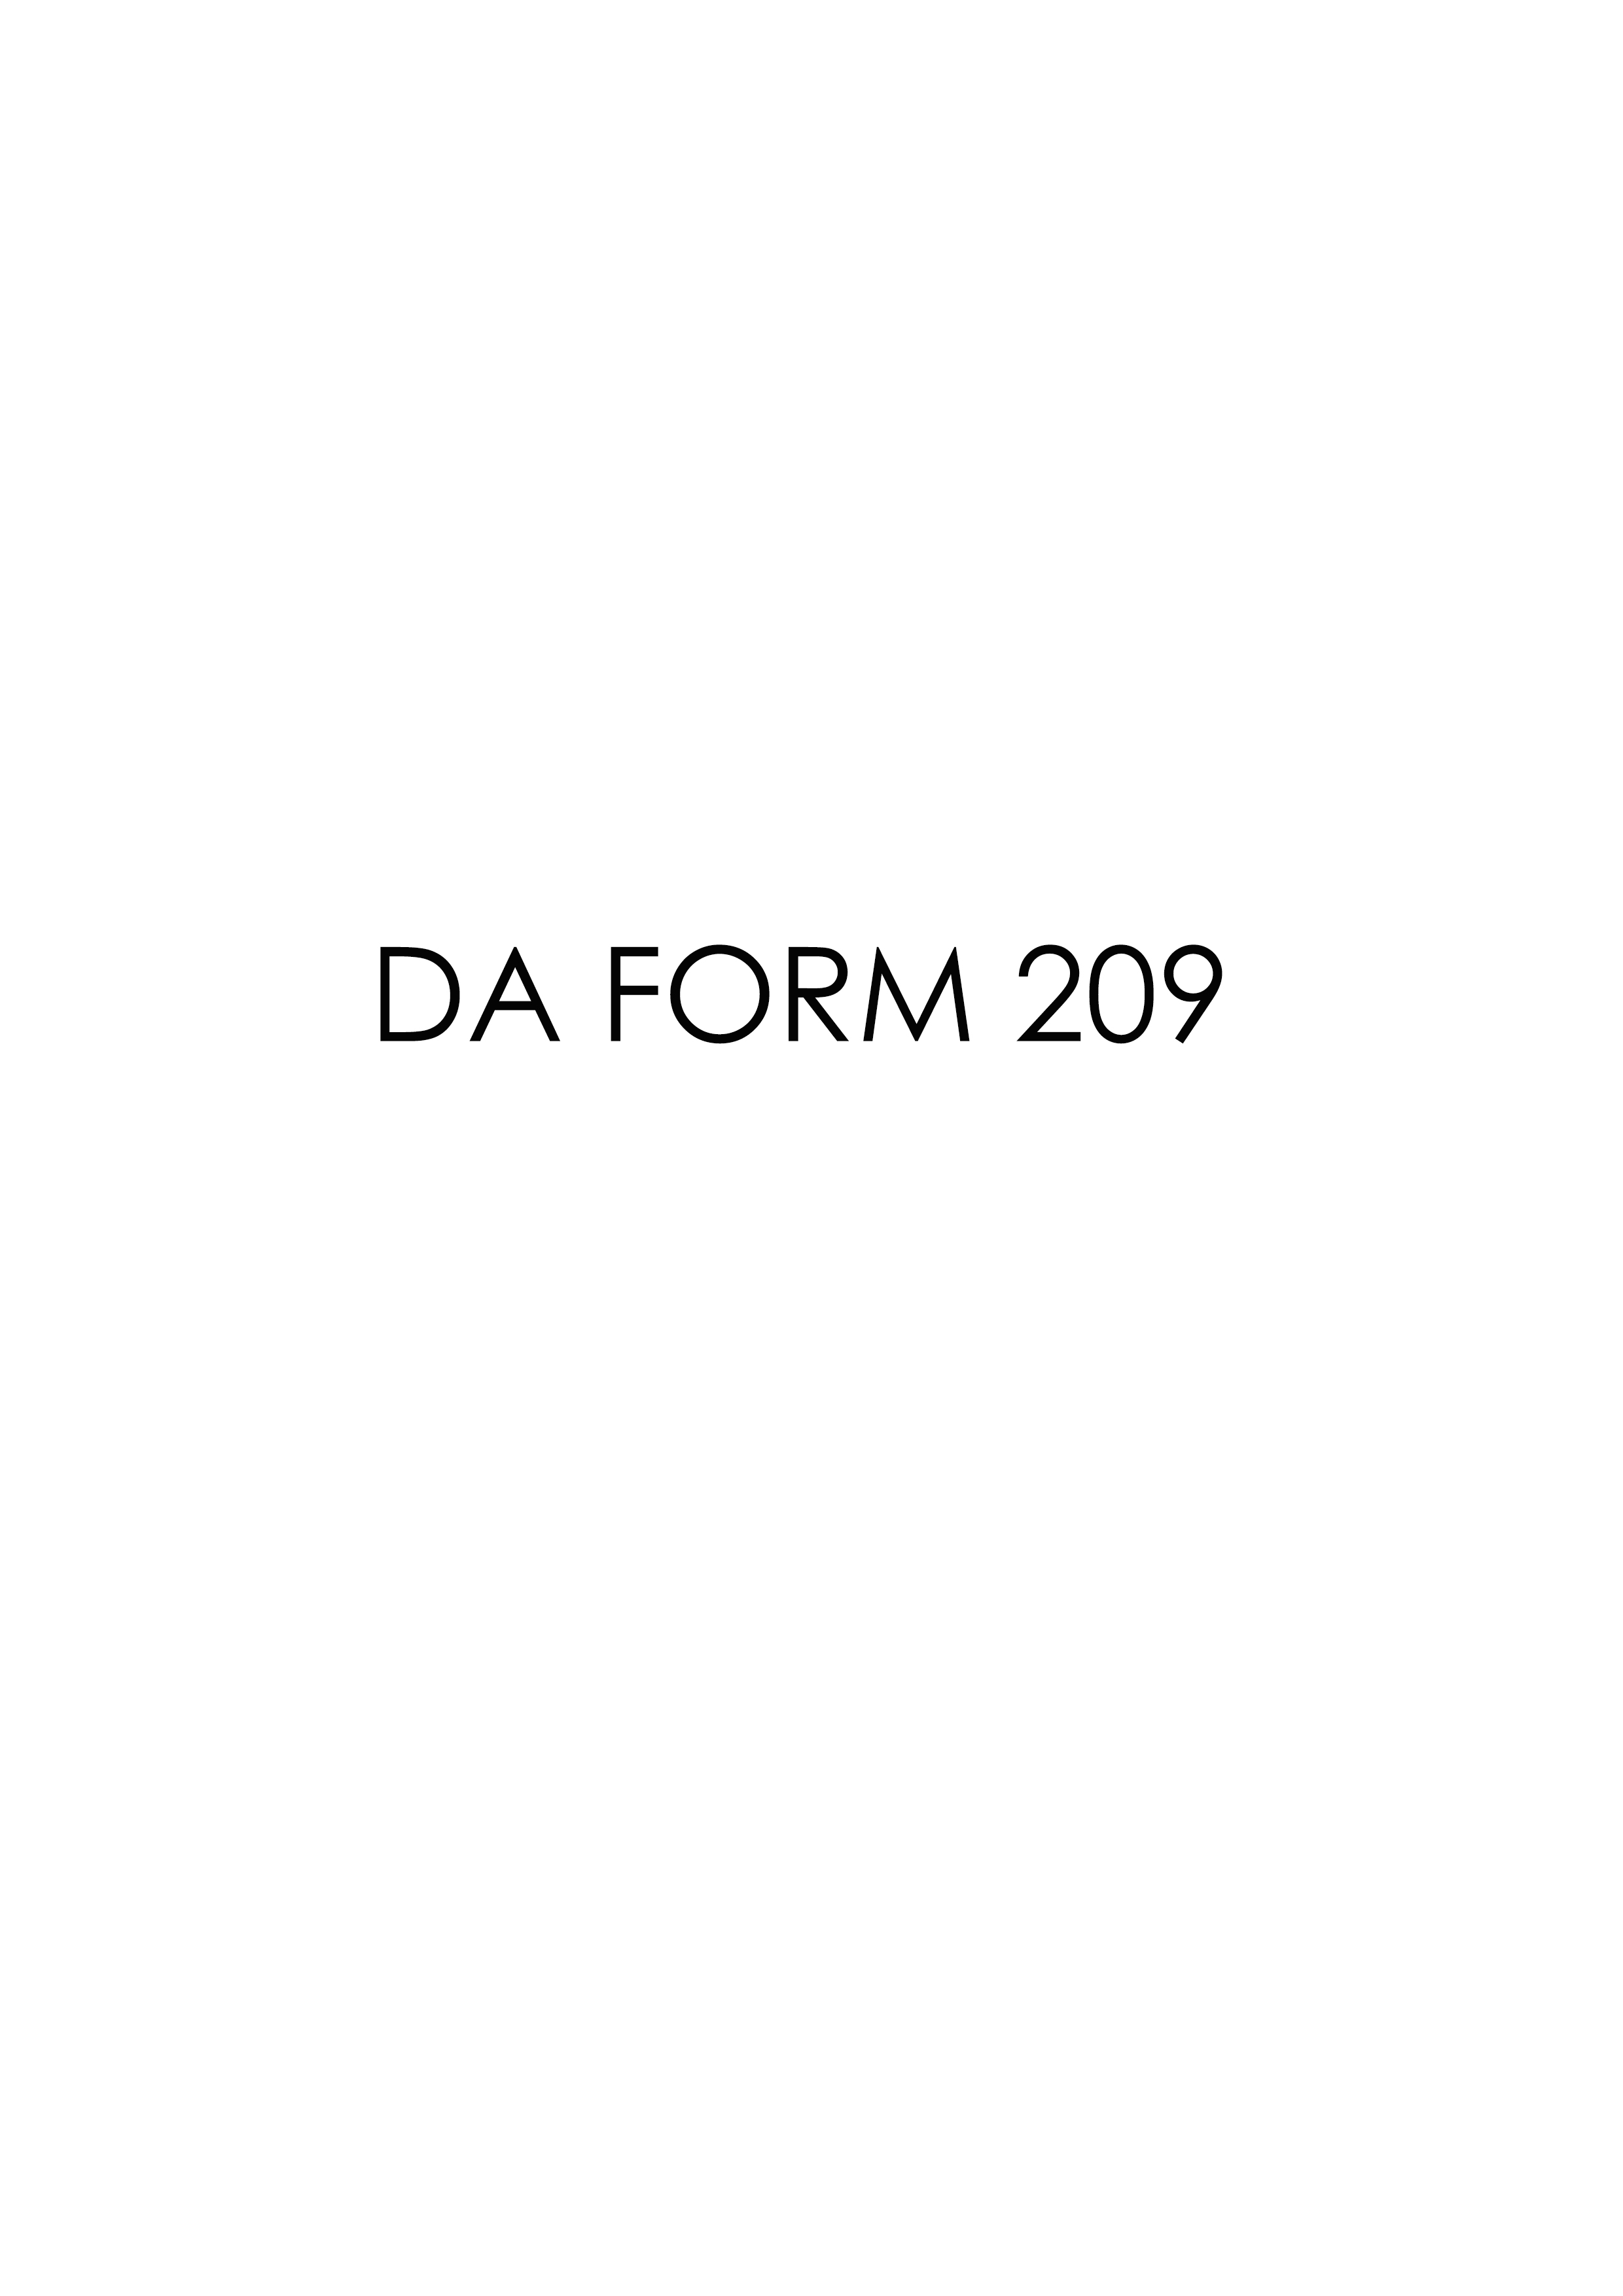 Download da 209 Form Free